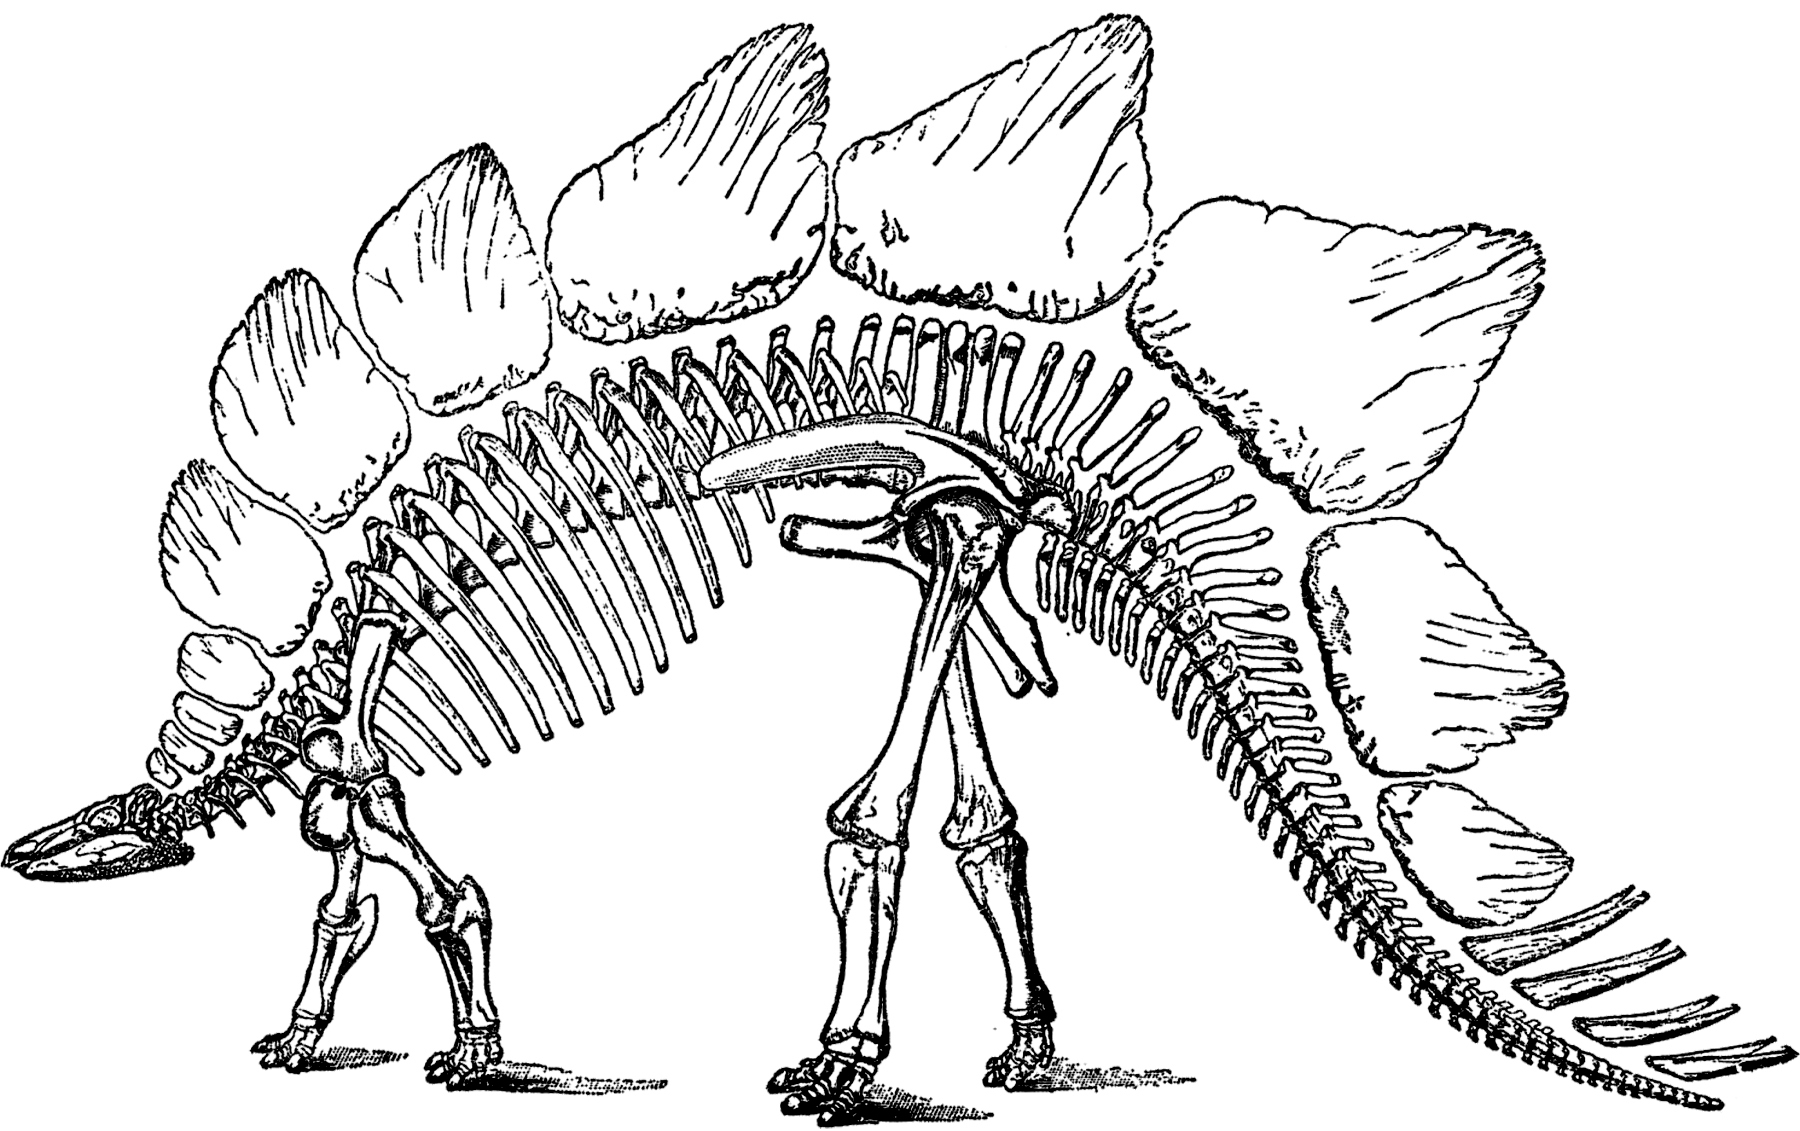 Download Public Domain Dinosaur Bones Image - Stegosaurus - The ...